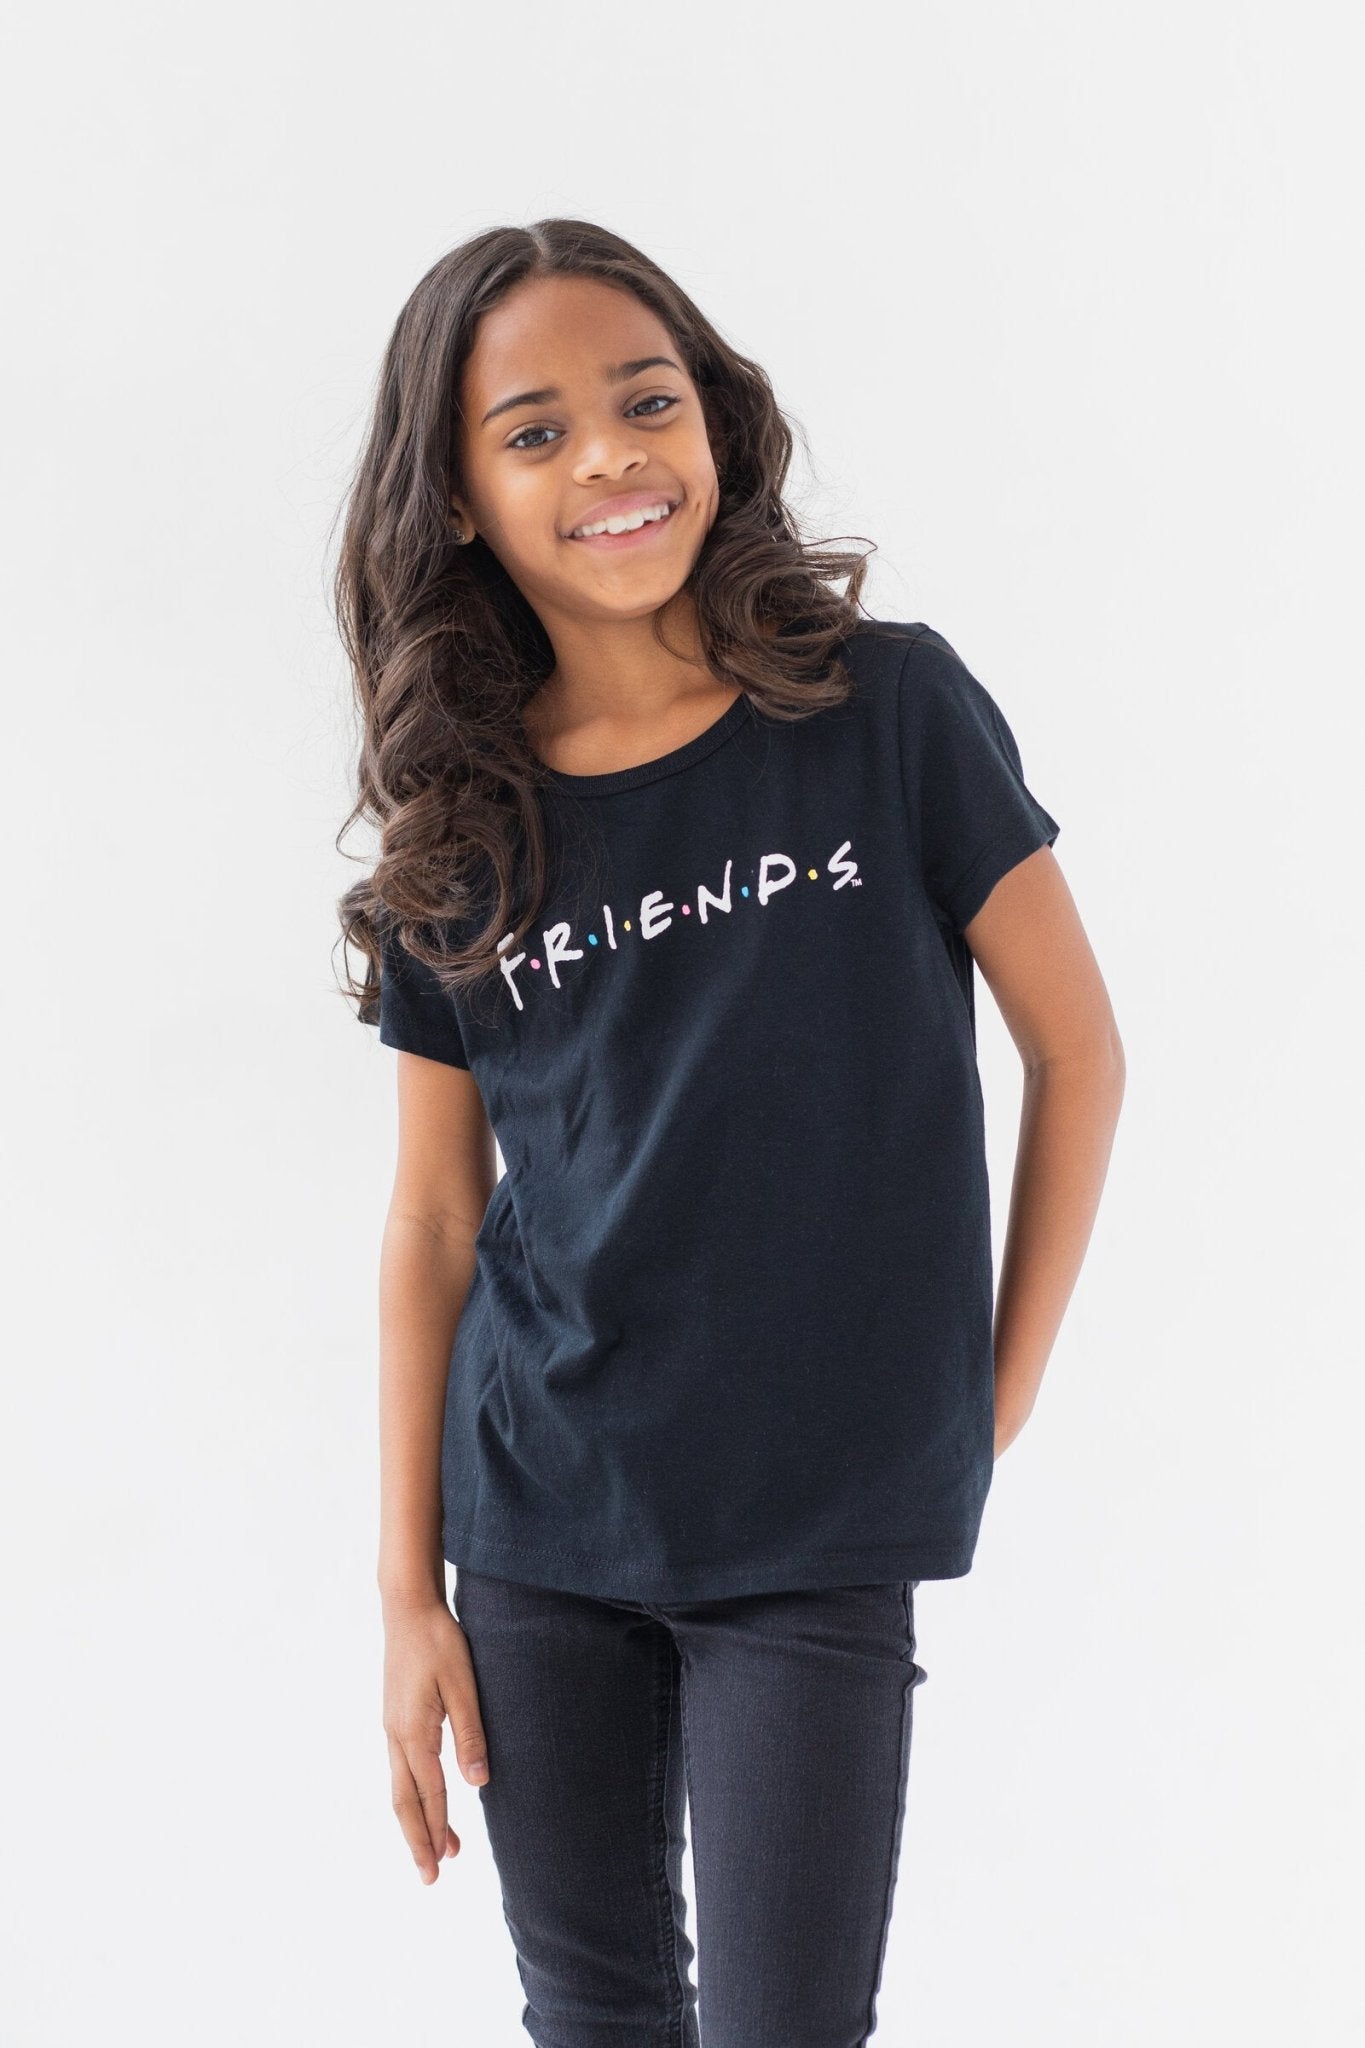 FRIENDS 3 Pack Graphic T-Shirts - imagikids